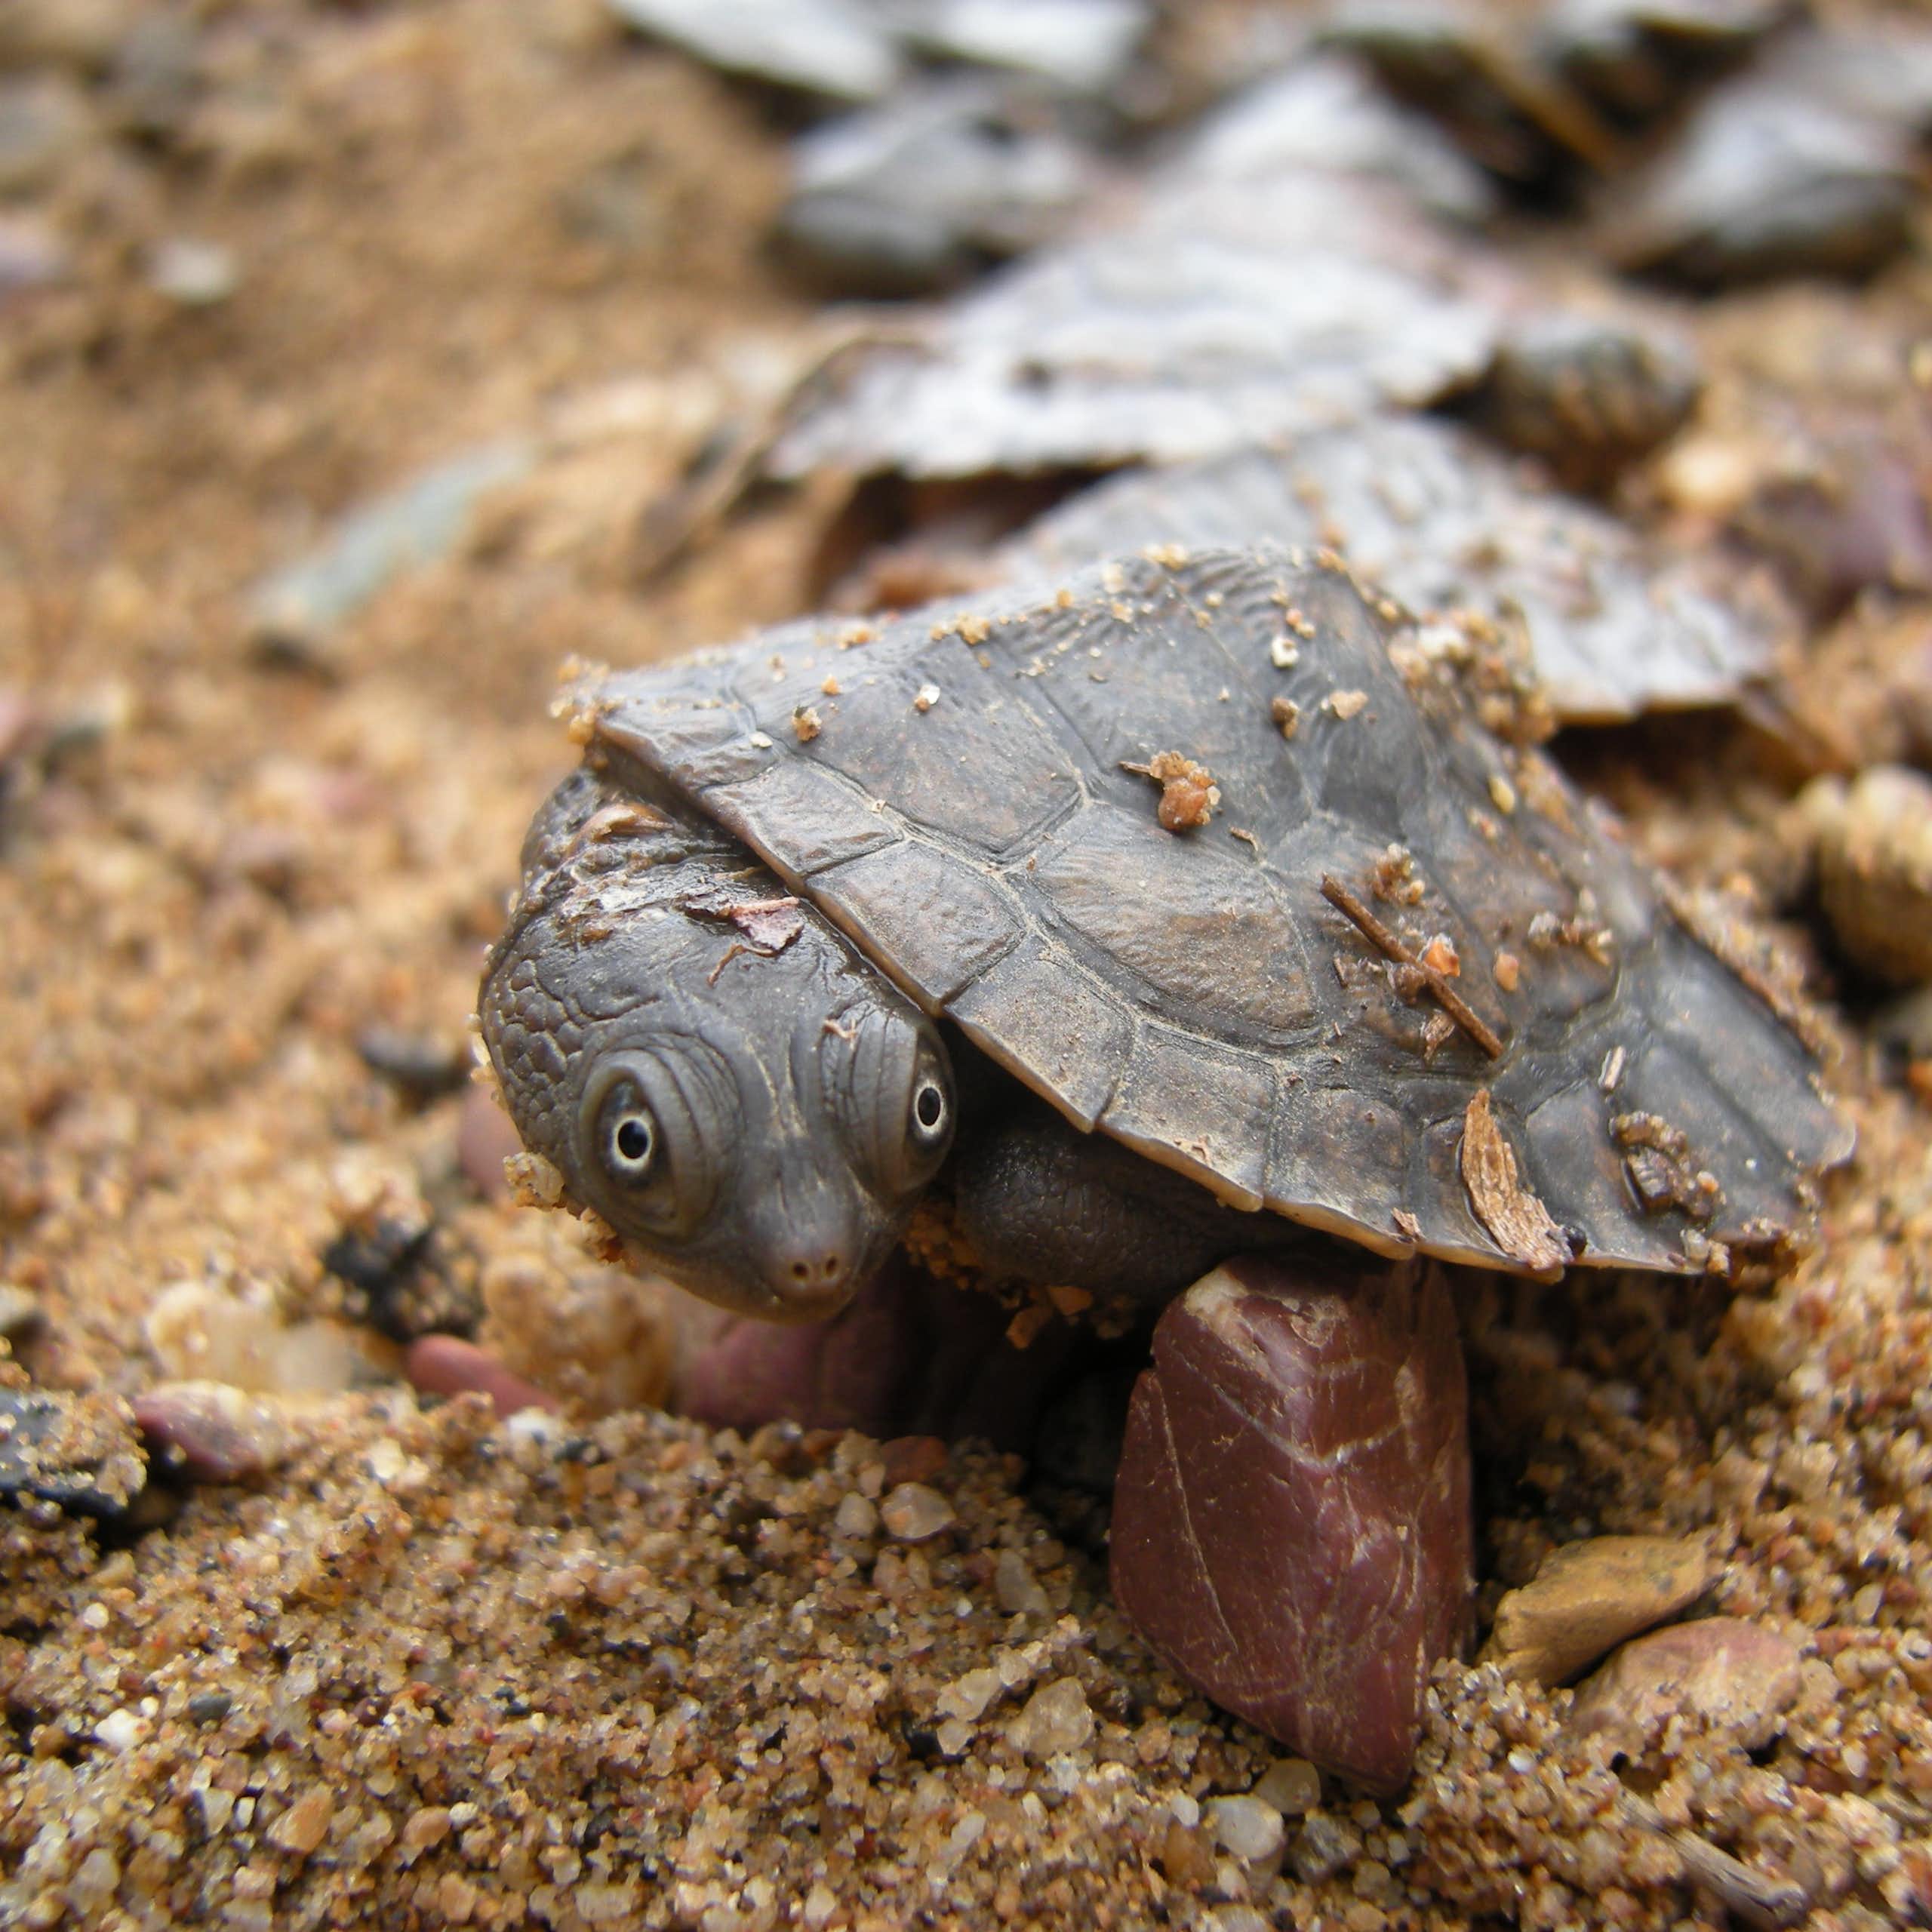 A turtle hatchling on sandy ground